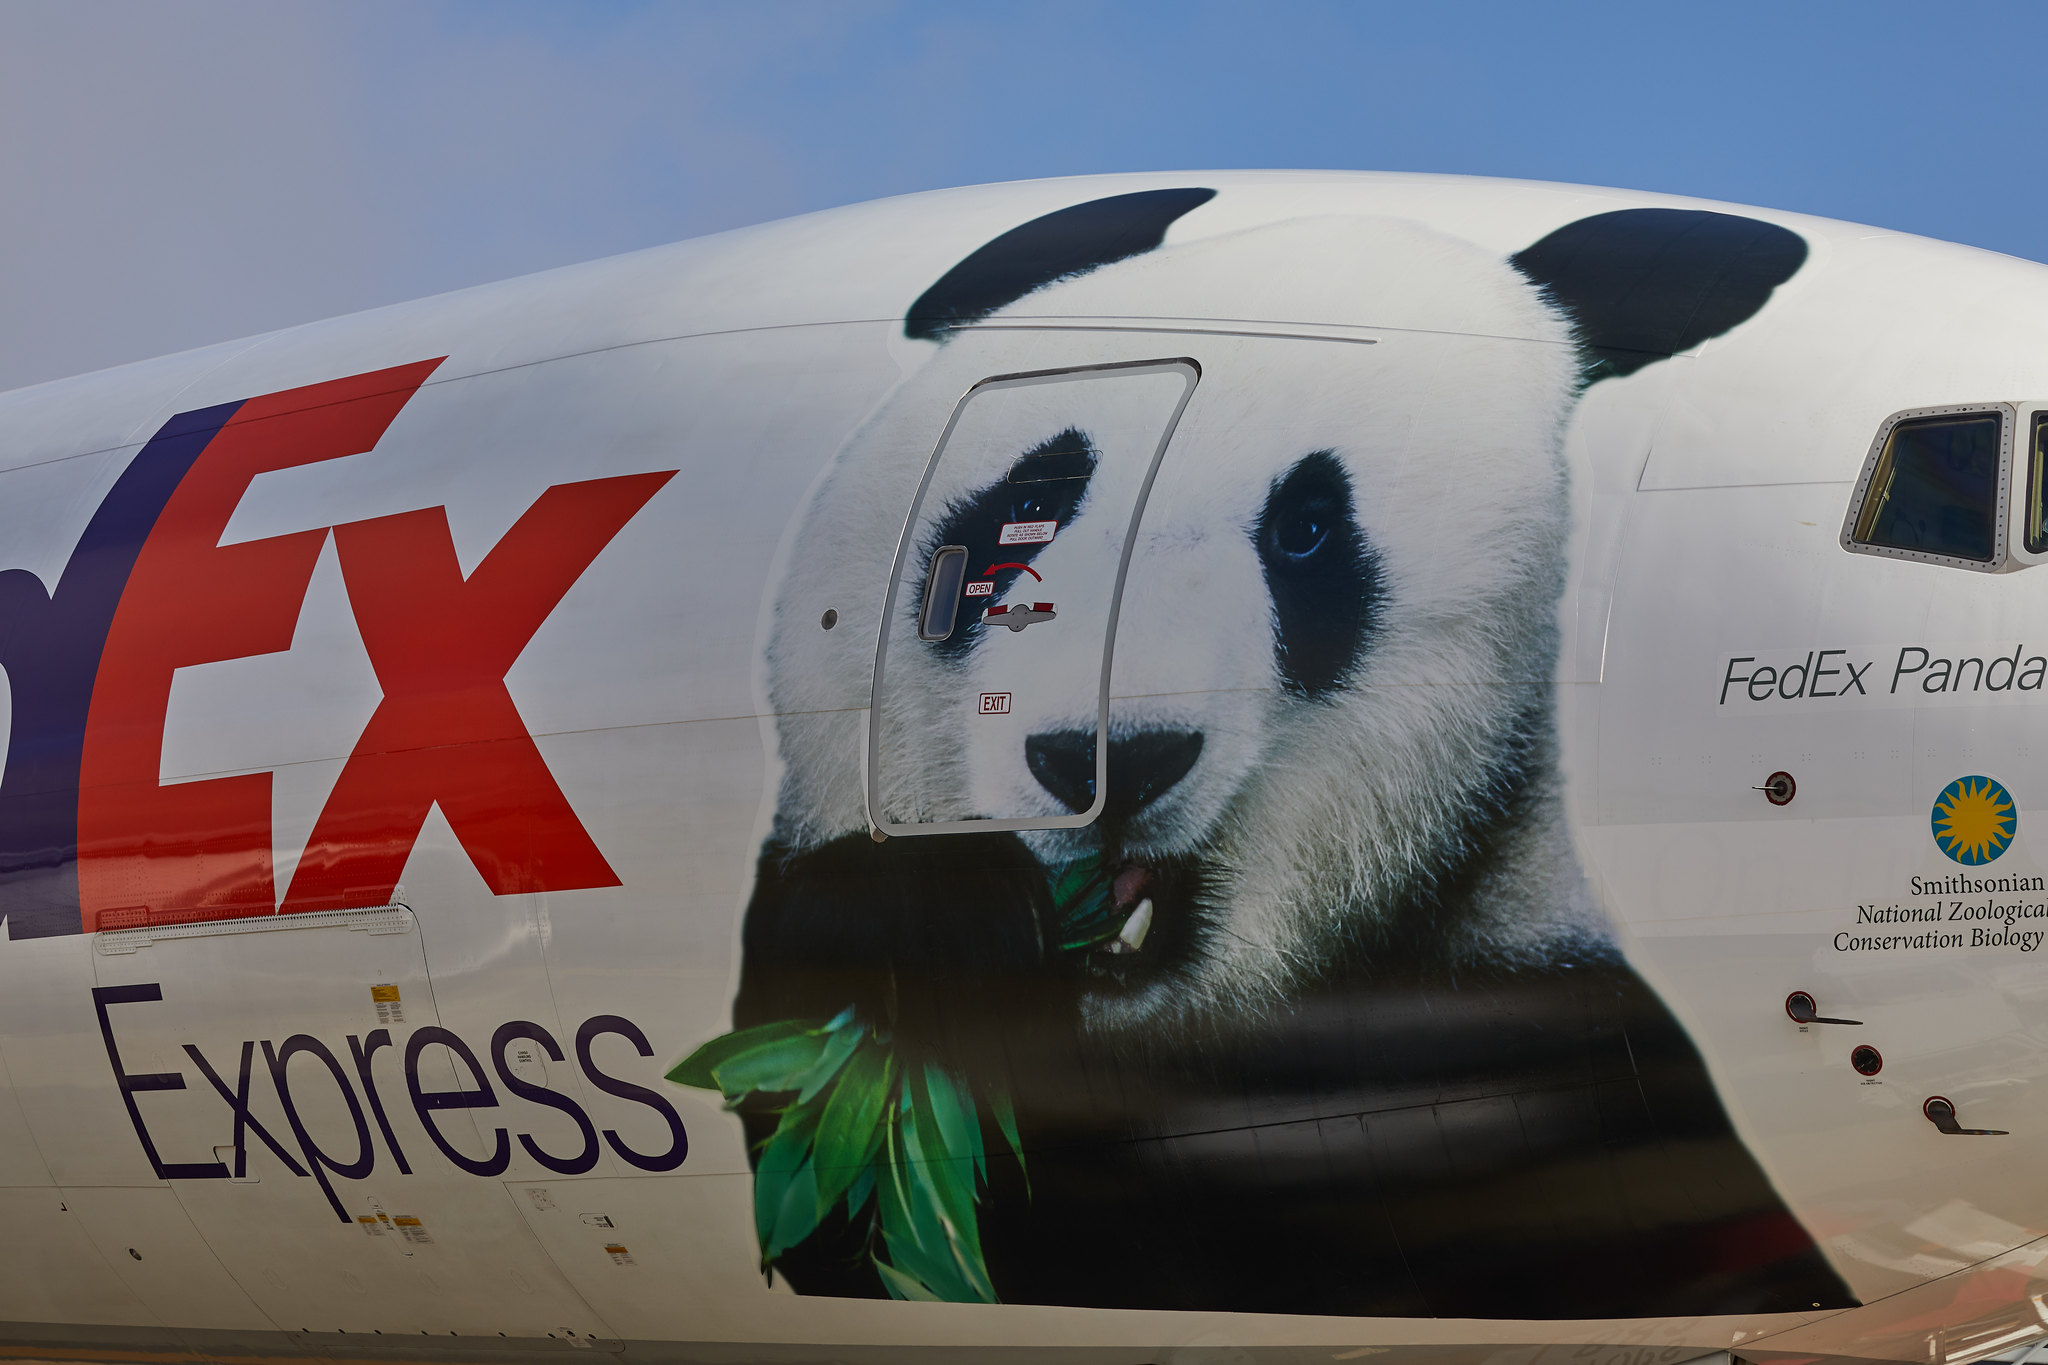 “FedEx熊猫快递号”777专机2.jpg